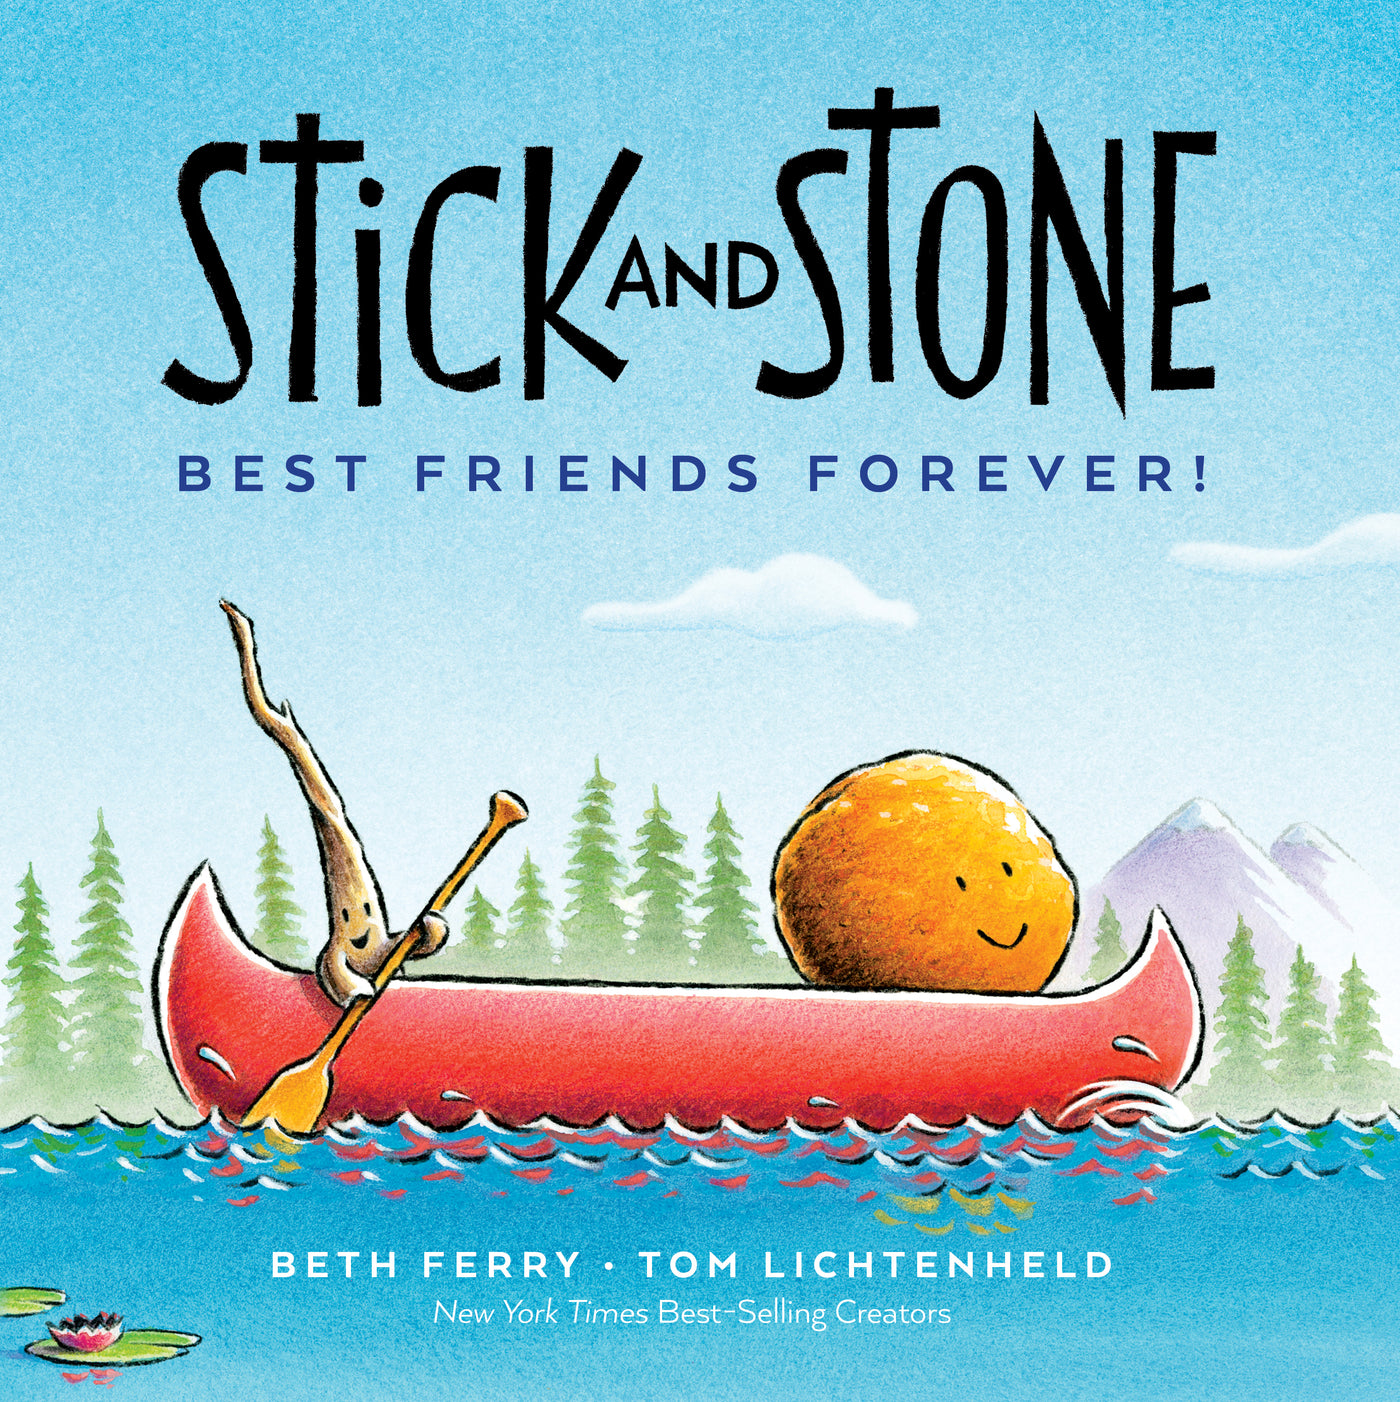 Stick and Stone Best Friends Forever - Mumzie's Children